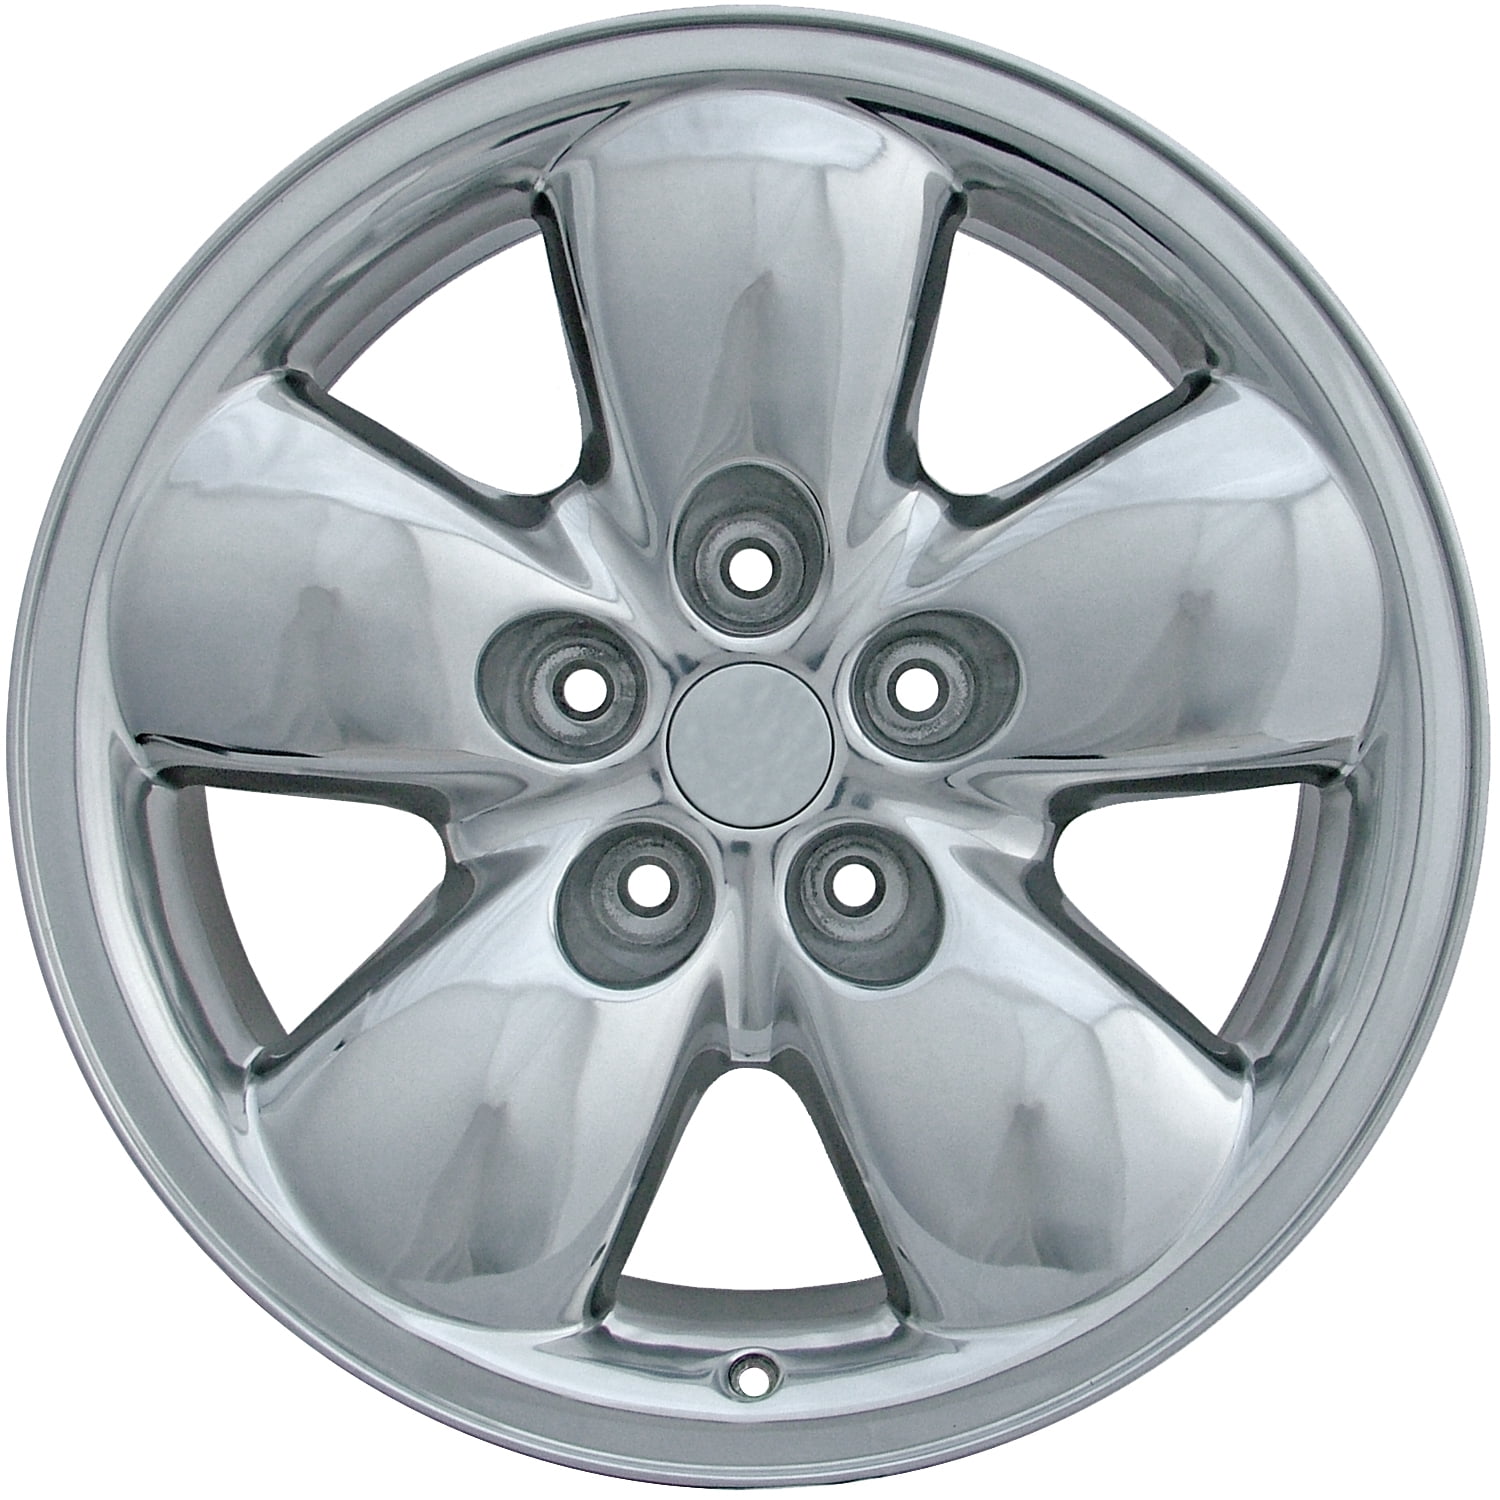 20 X 9 New Aluminum Alloy Wheel Replica, Chrome Cladded, Fits 2003-2005 2005 Dodge Ram 1500 Tire Size 20